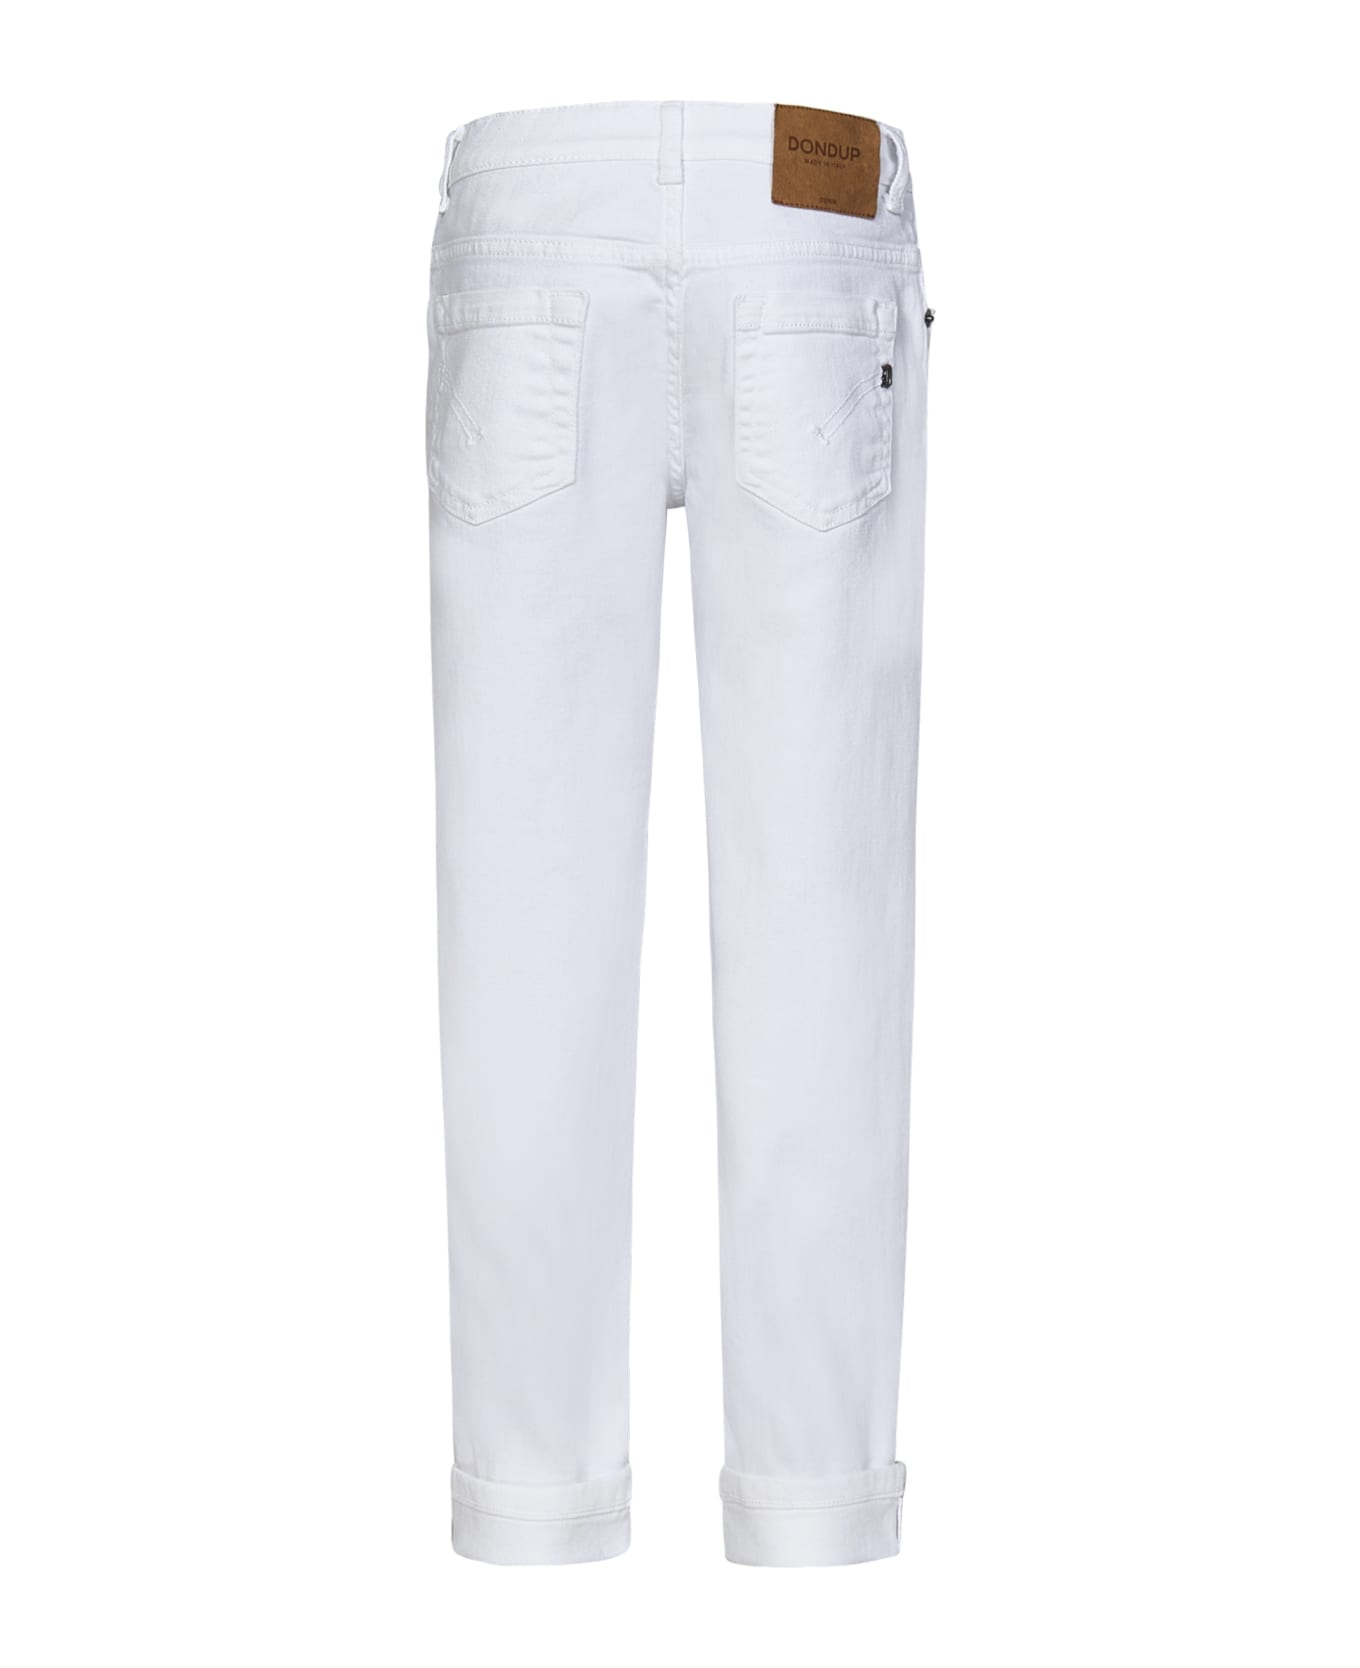 Dondup Kids Jeans - White